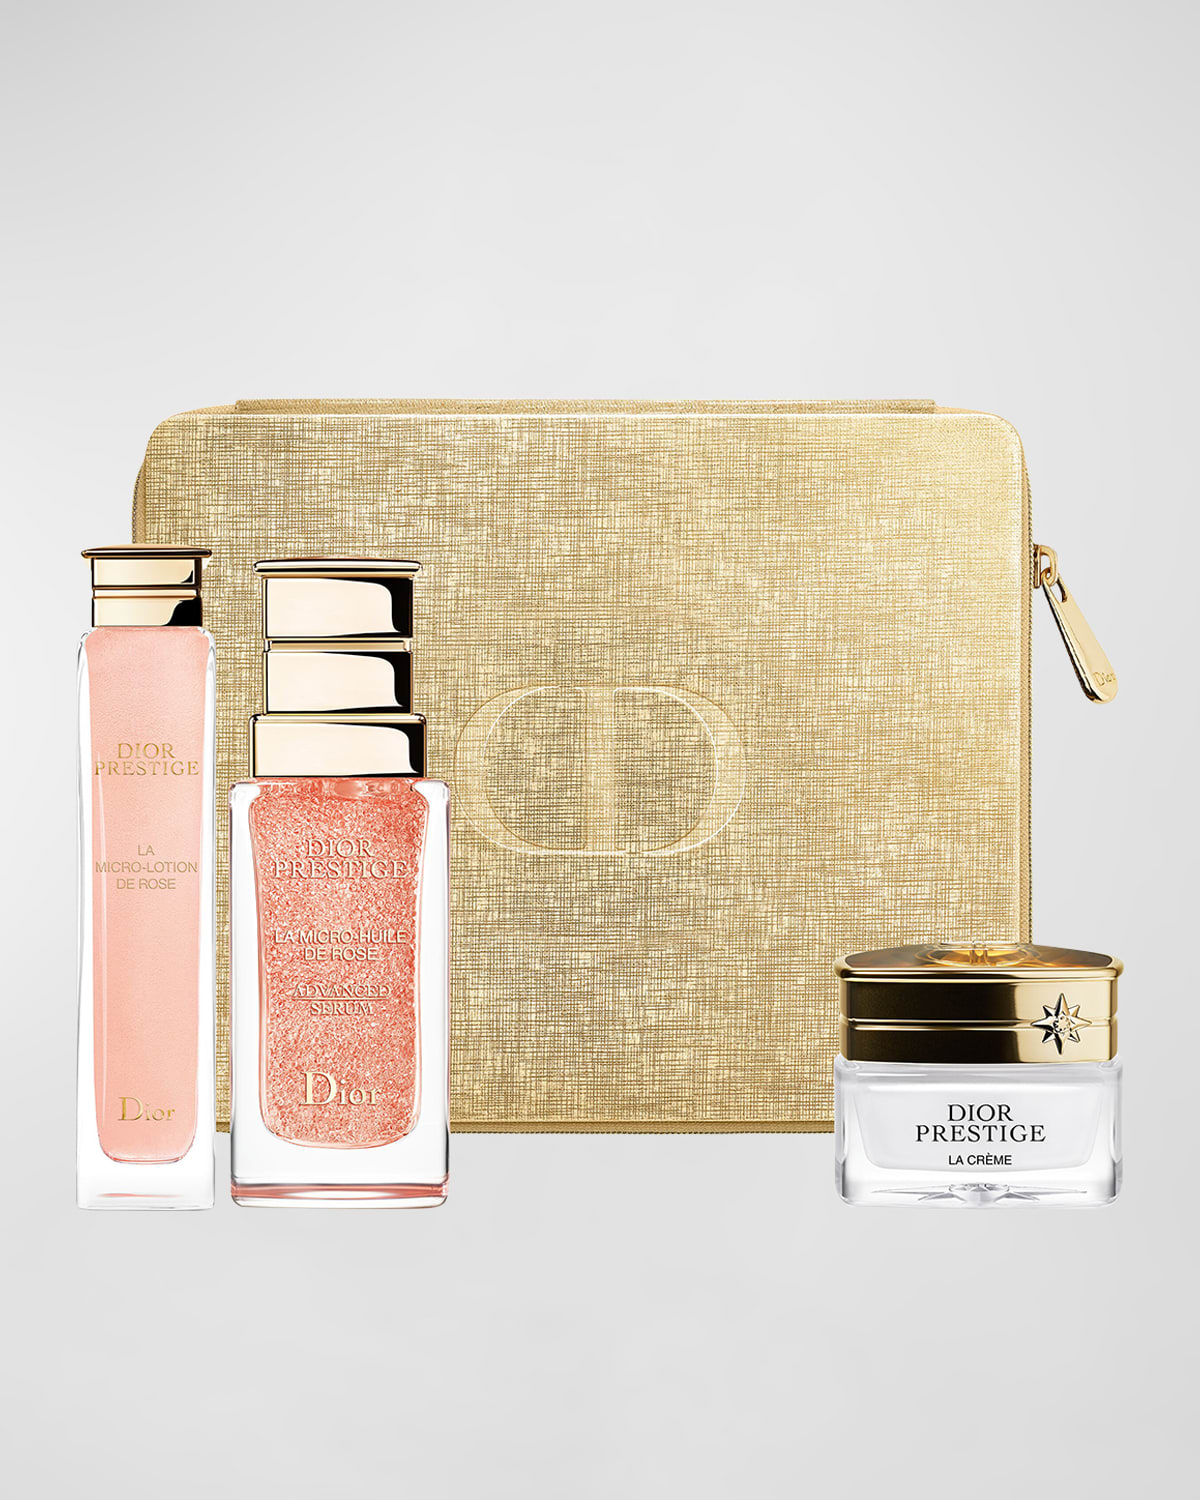 Dior Limited Edition Dior Prestige Micro-Nutritive & Regenerating Skincare Set